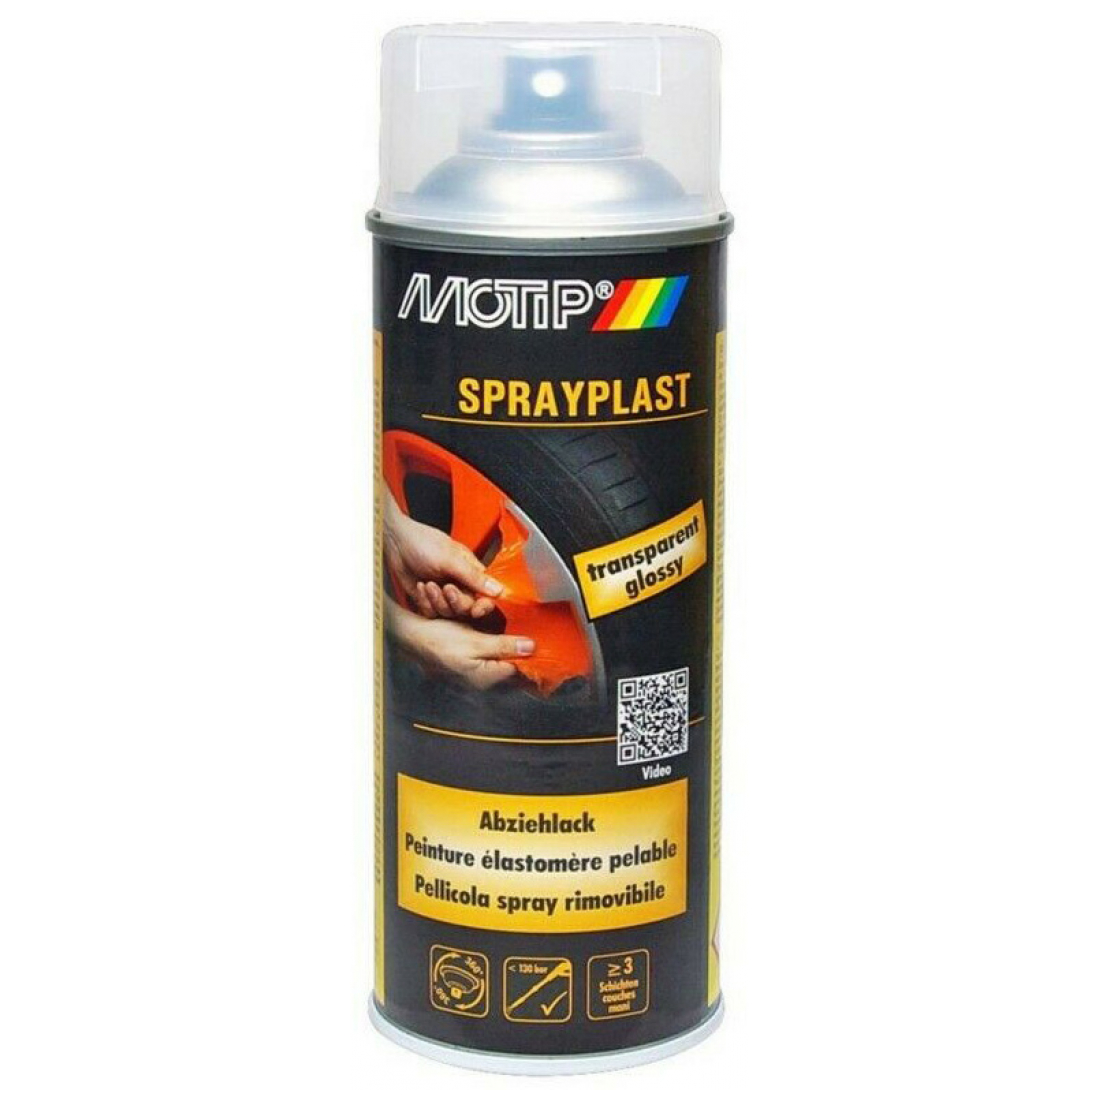 Motip Sprayplast Abziehlack transparent glänzend 400 ml 396571